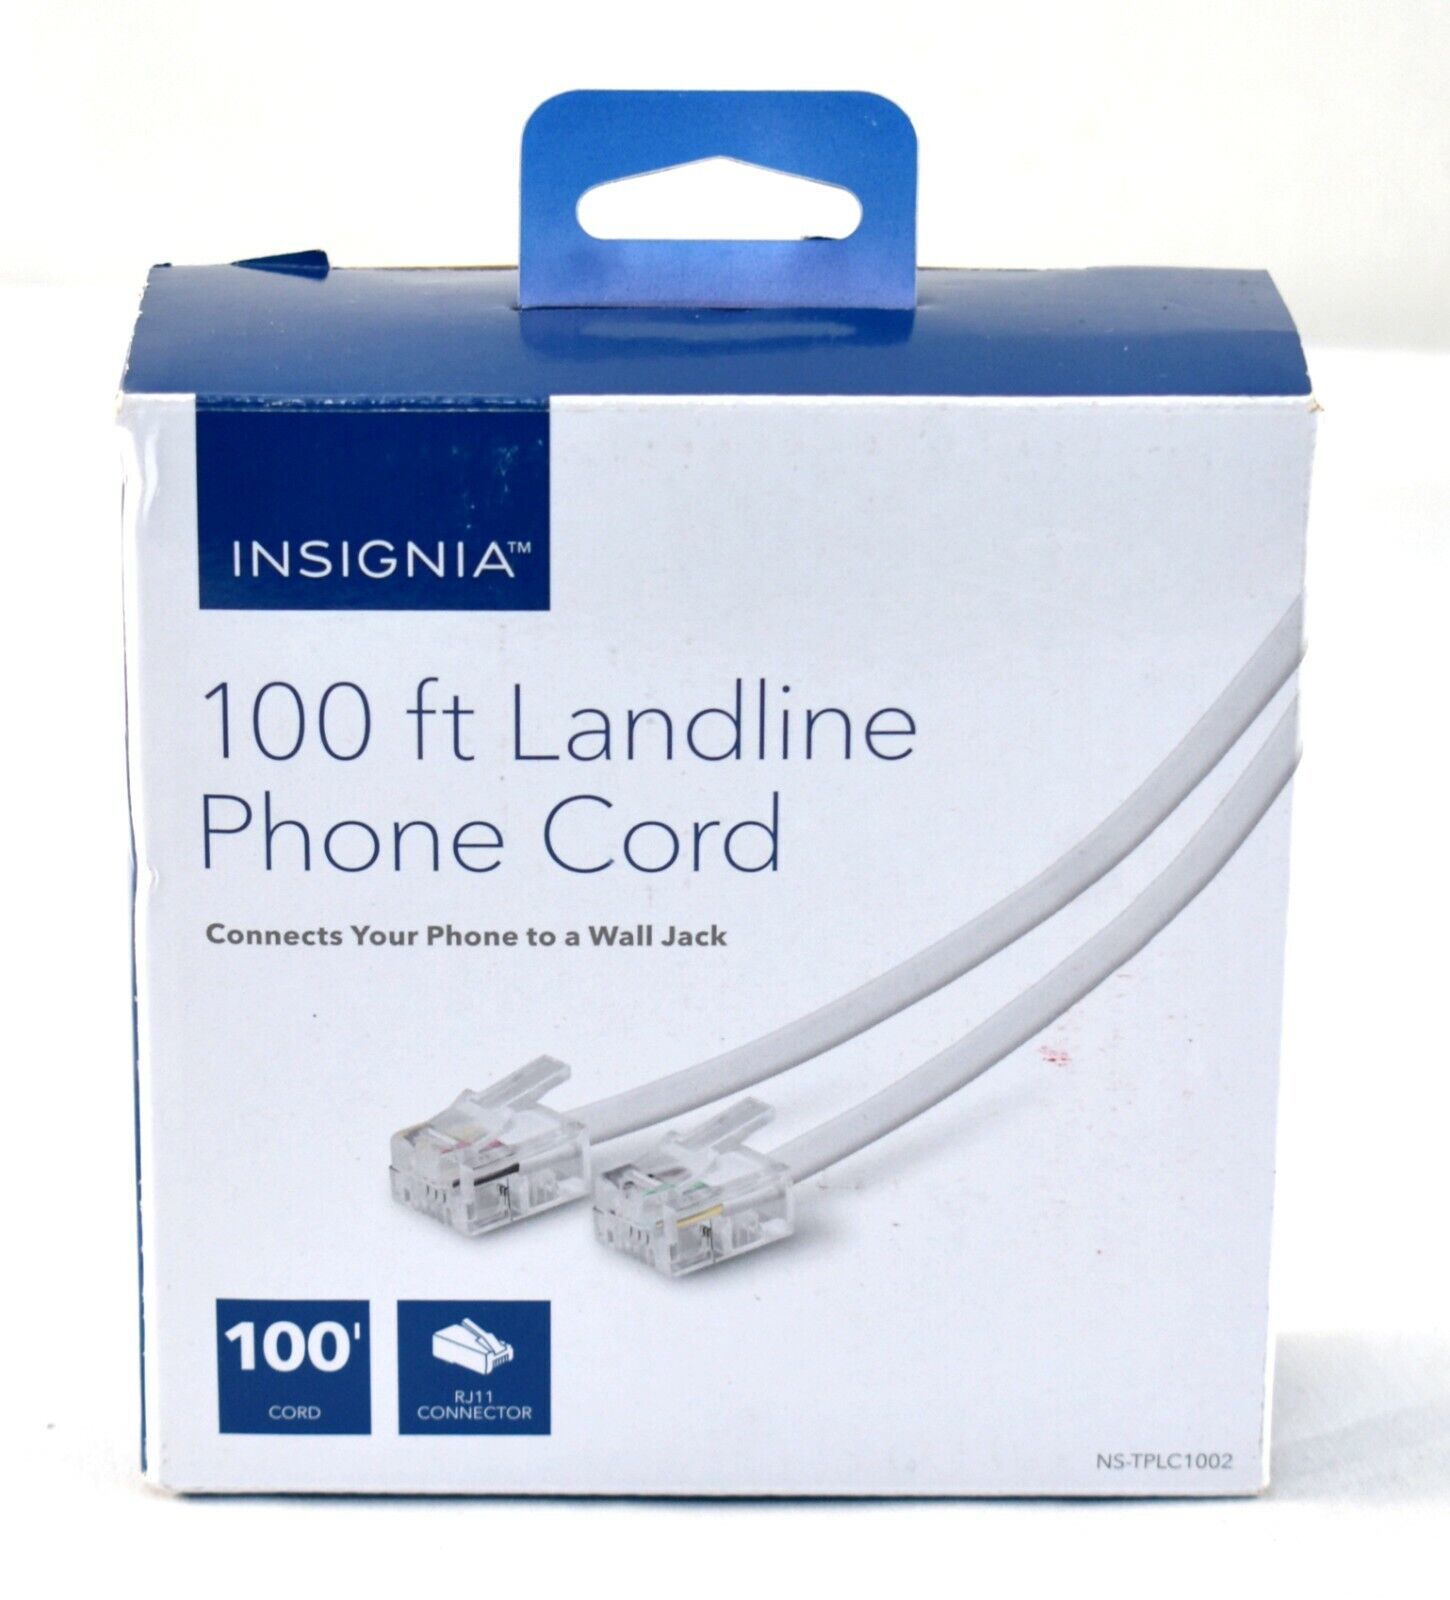 Insignia 100' Landline Phone Cord RJ11 Connector NS-TPLC1002 White  9664sw